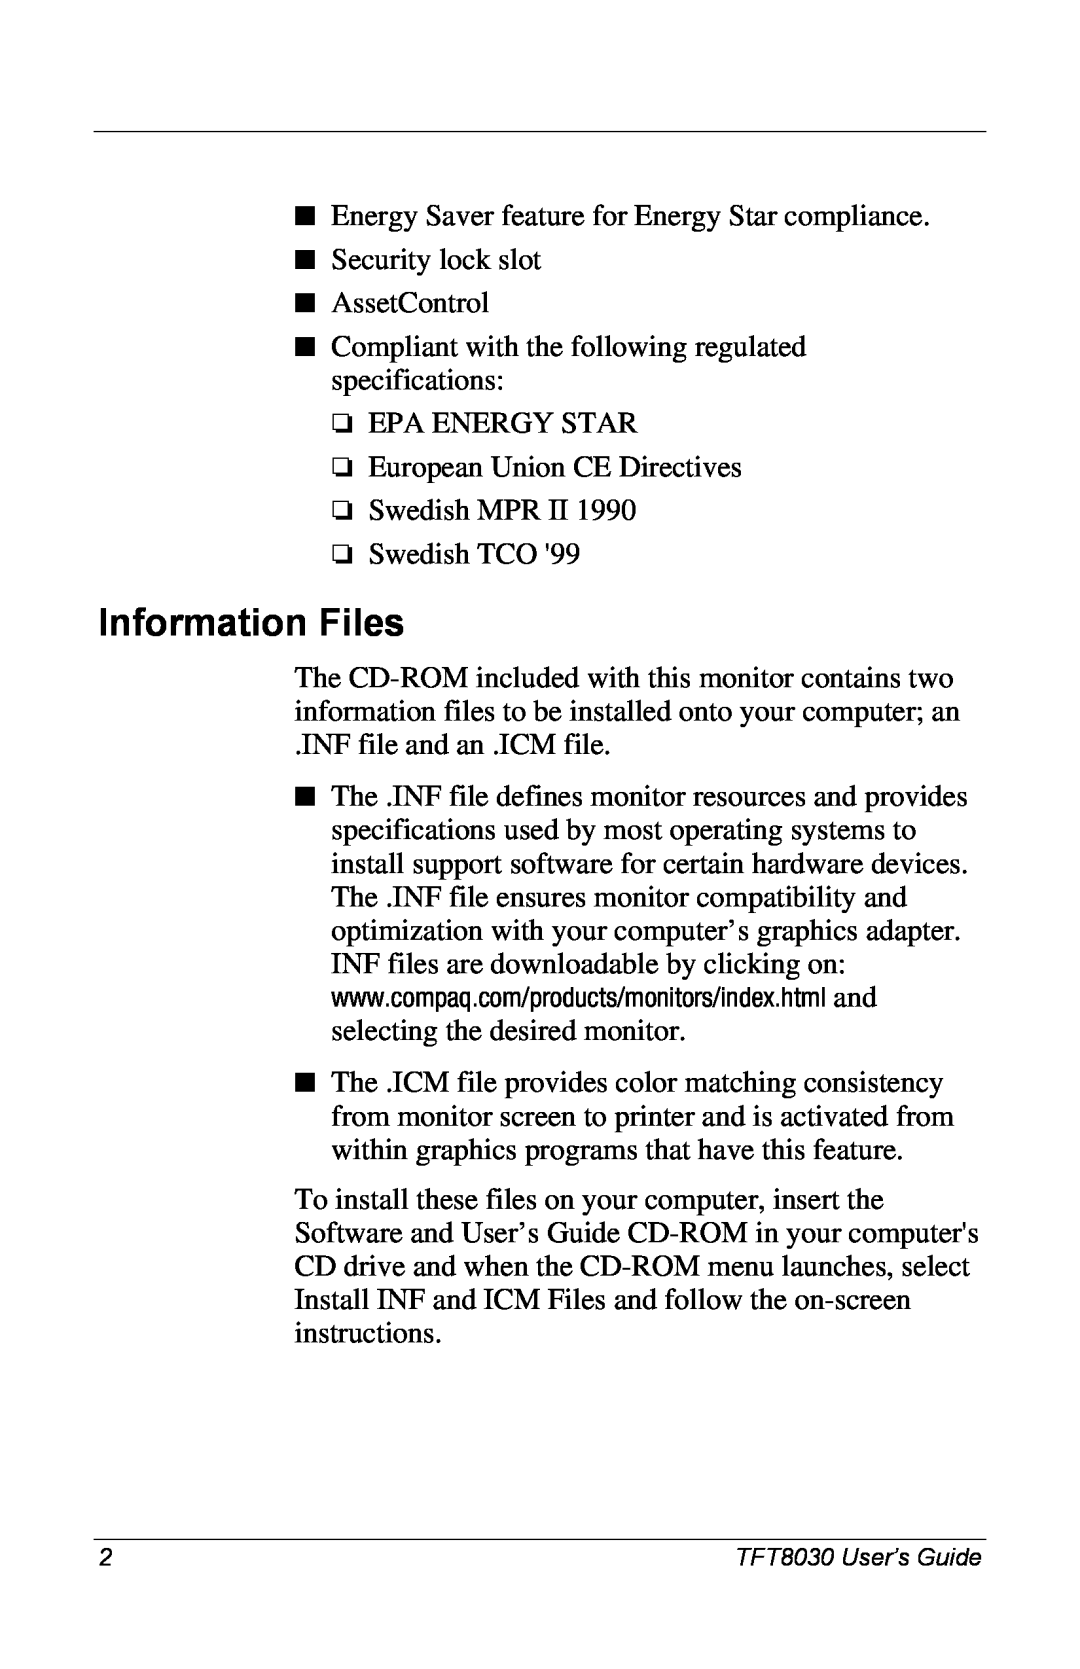 Compaq 8030 manual Information Files 